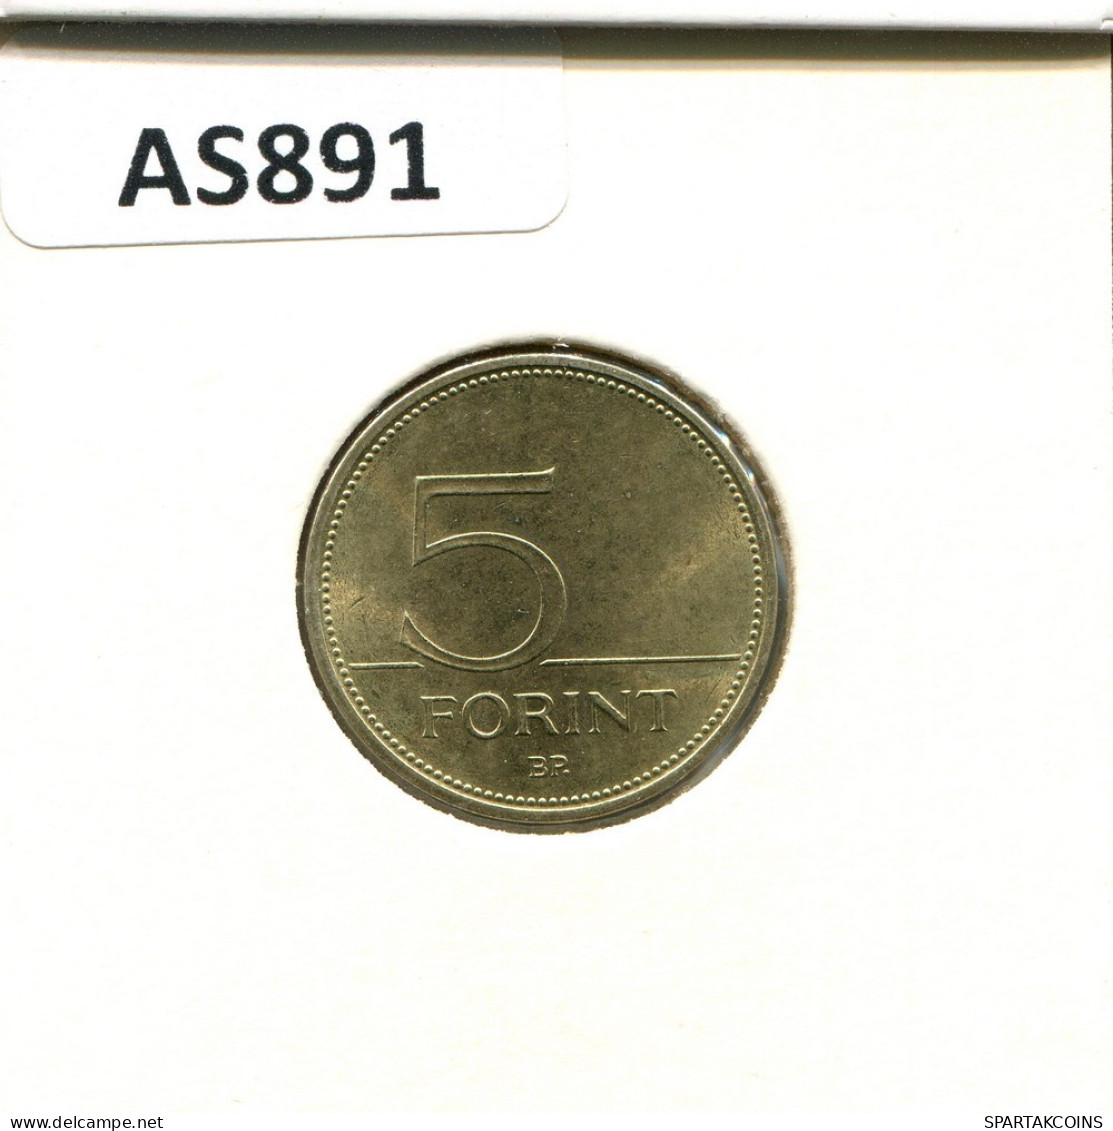 5 FORINT 1993 HUNGARY Coin #AS891.U.A - Hungary